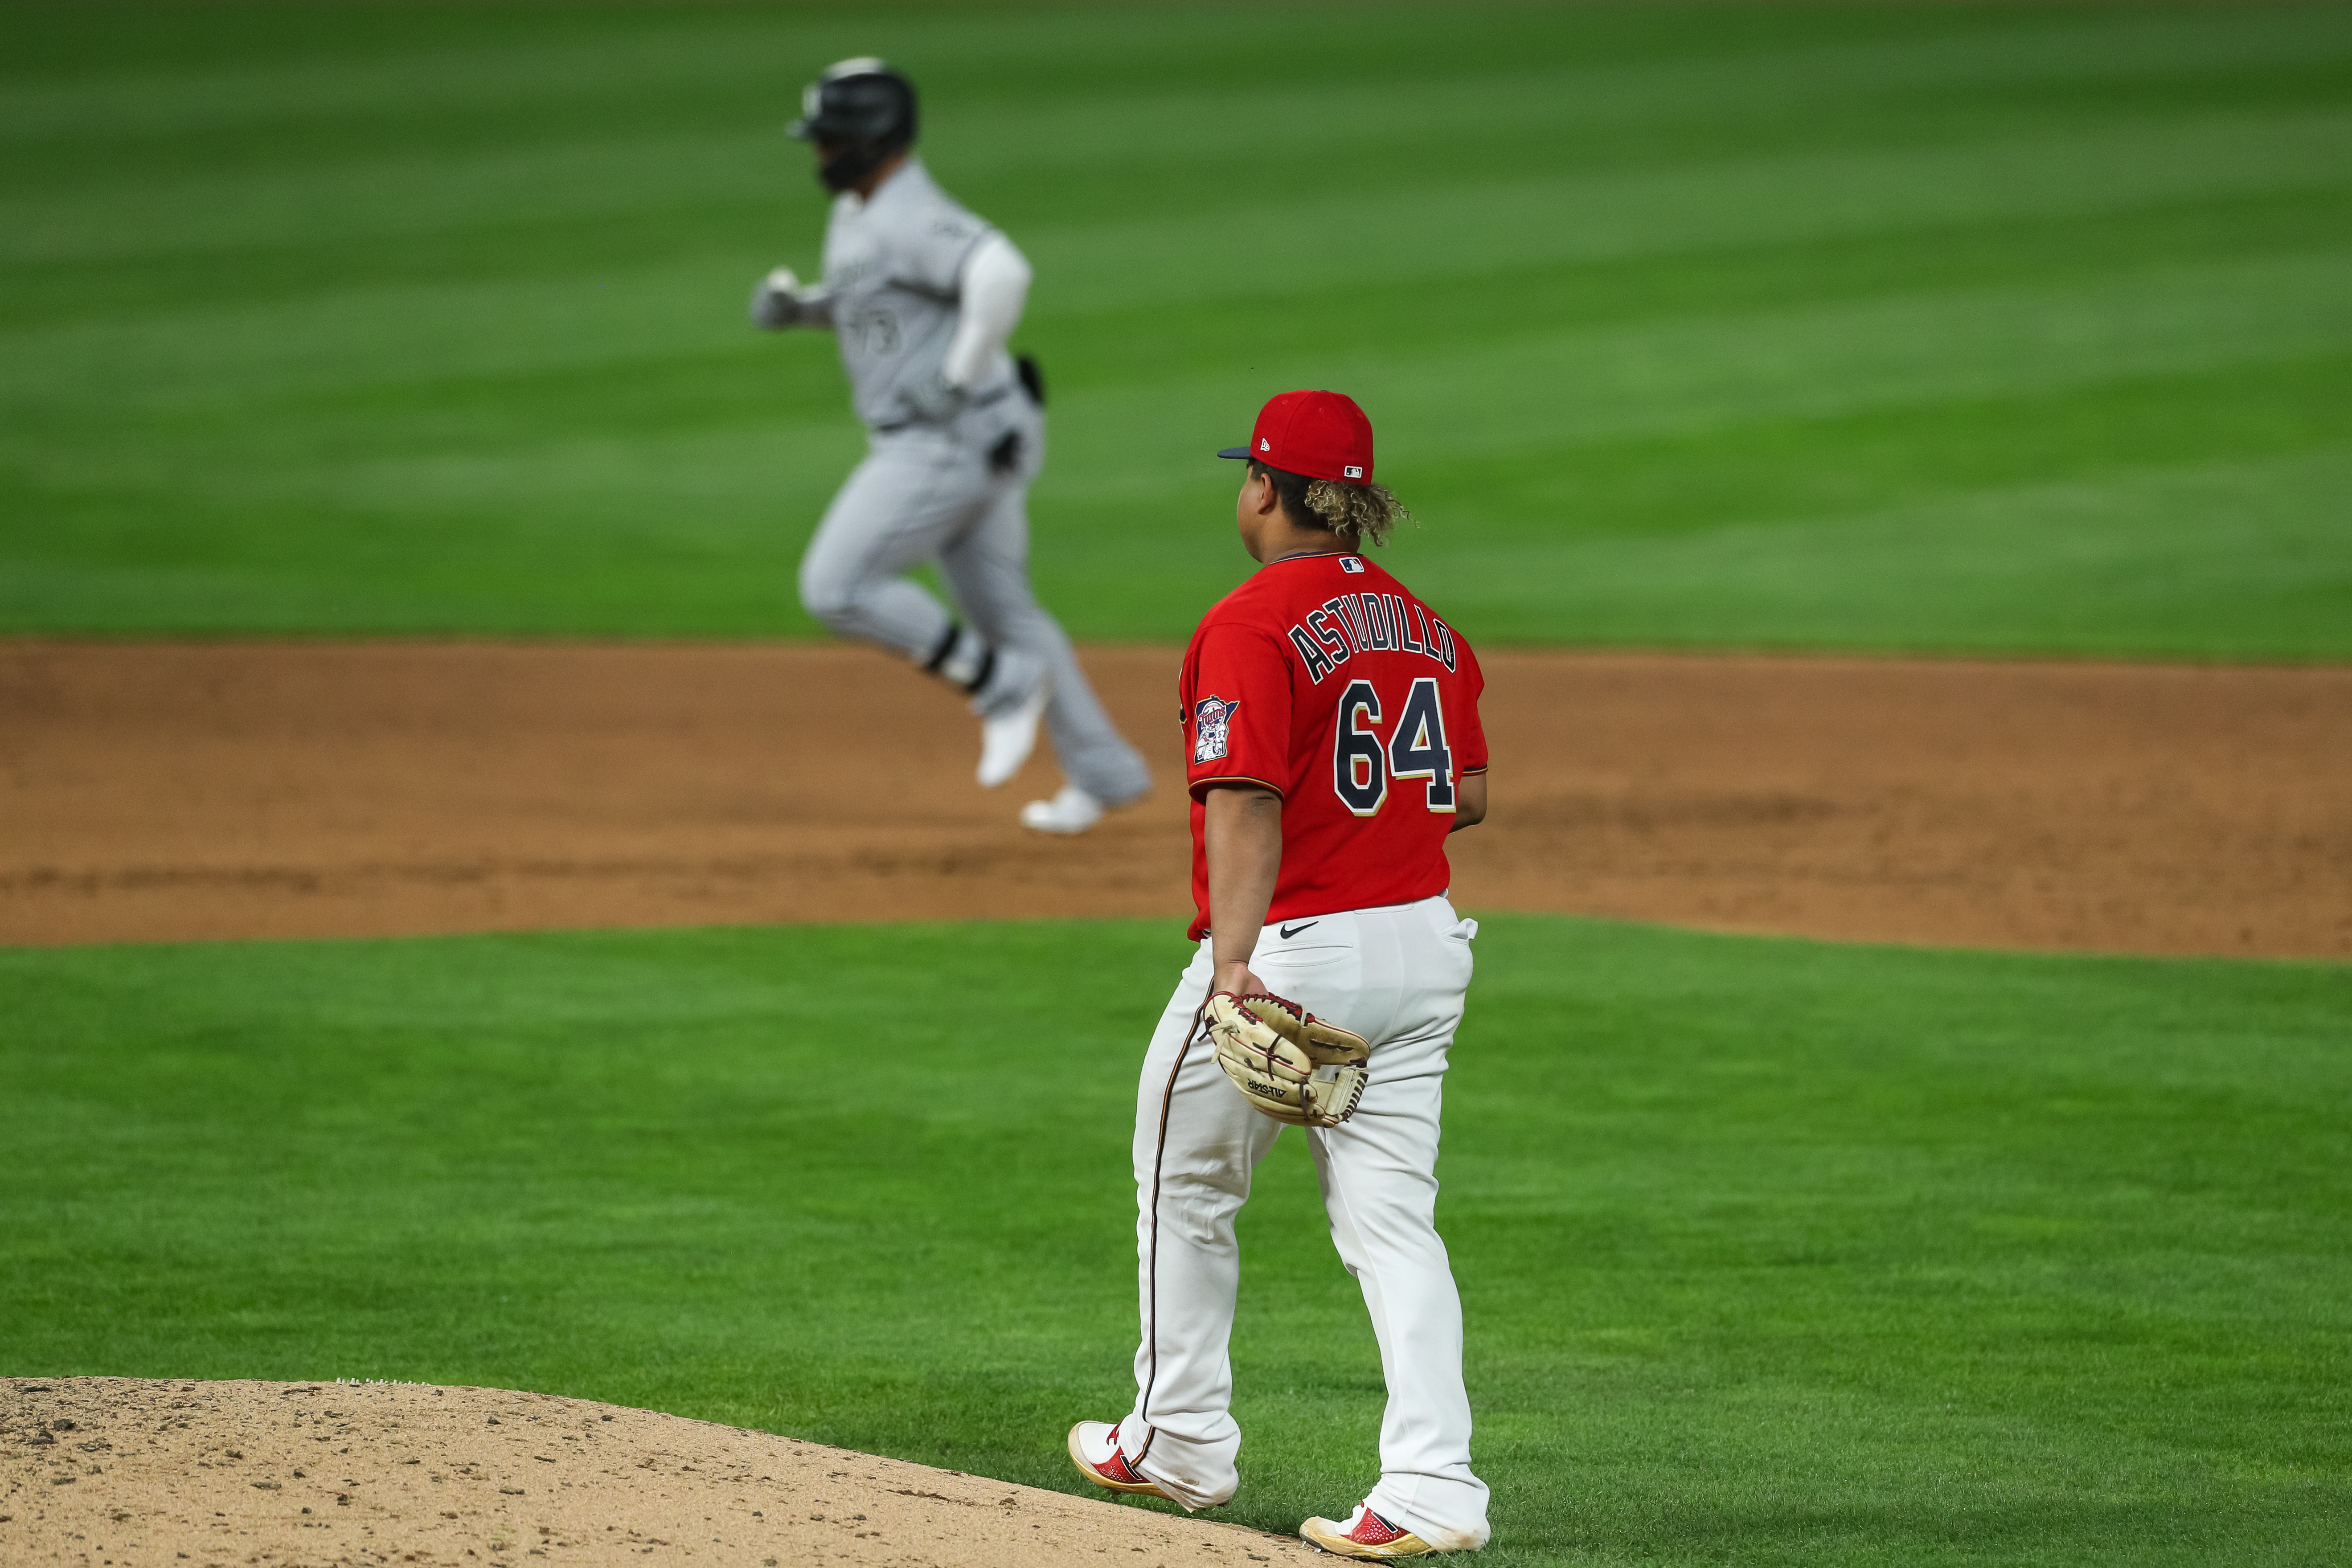 Should baseball's unwritten rules be made history? - The Boston Globe